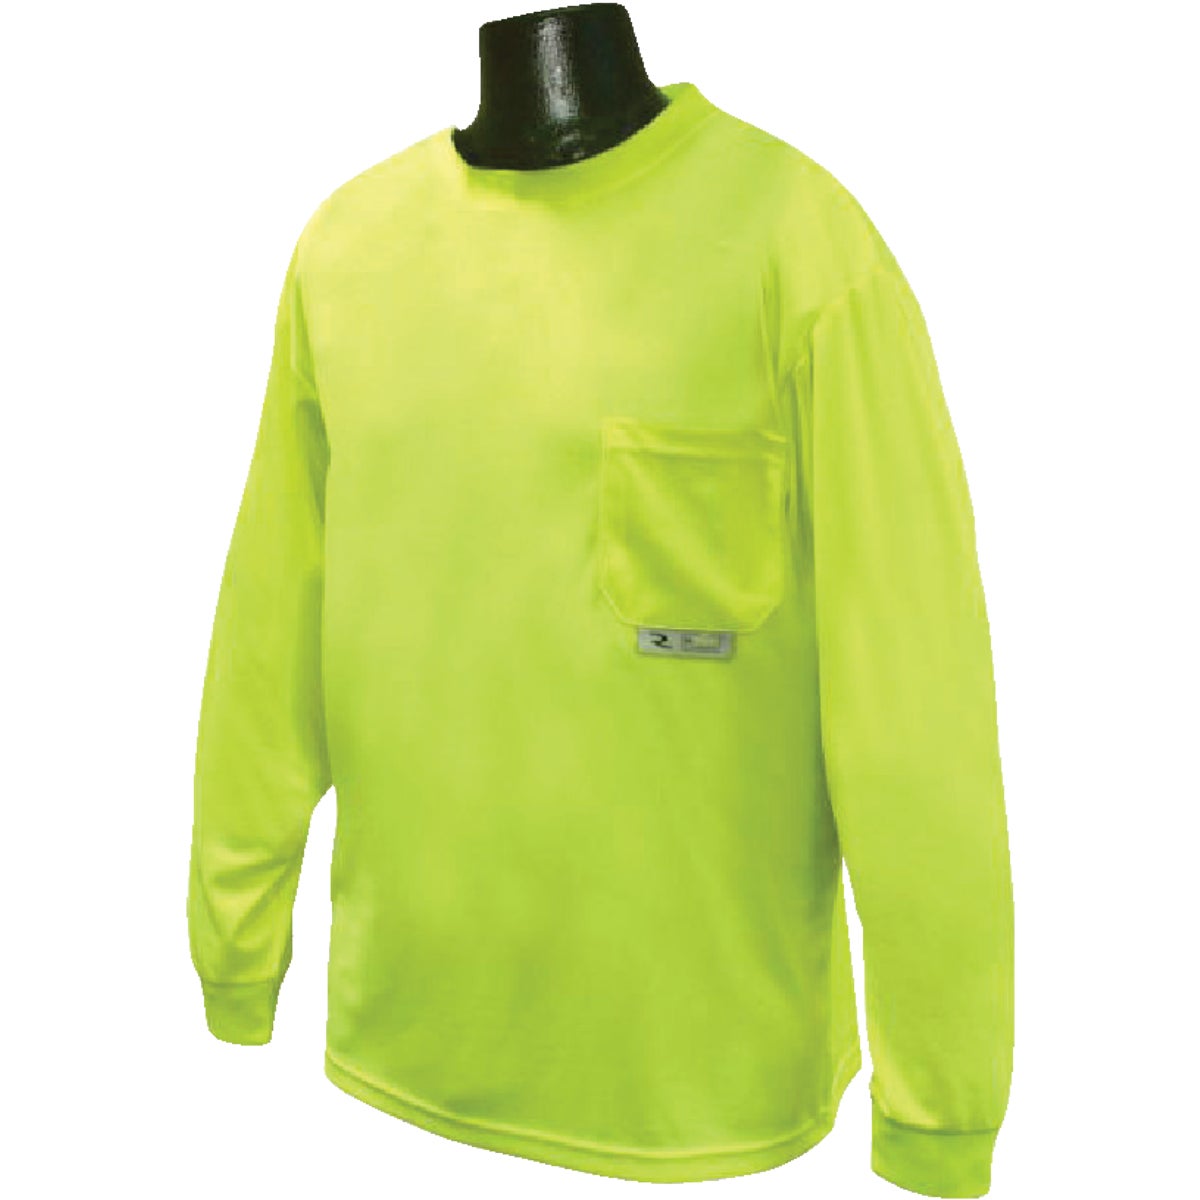 Safety Works Professional Hi-Vis Green Long Sleeve Safety Shirt, Large